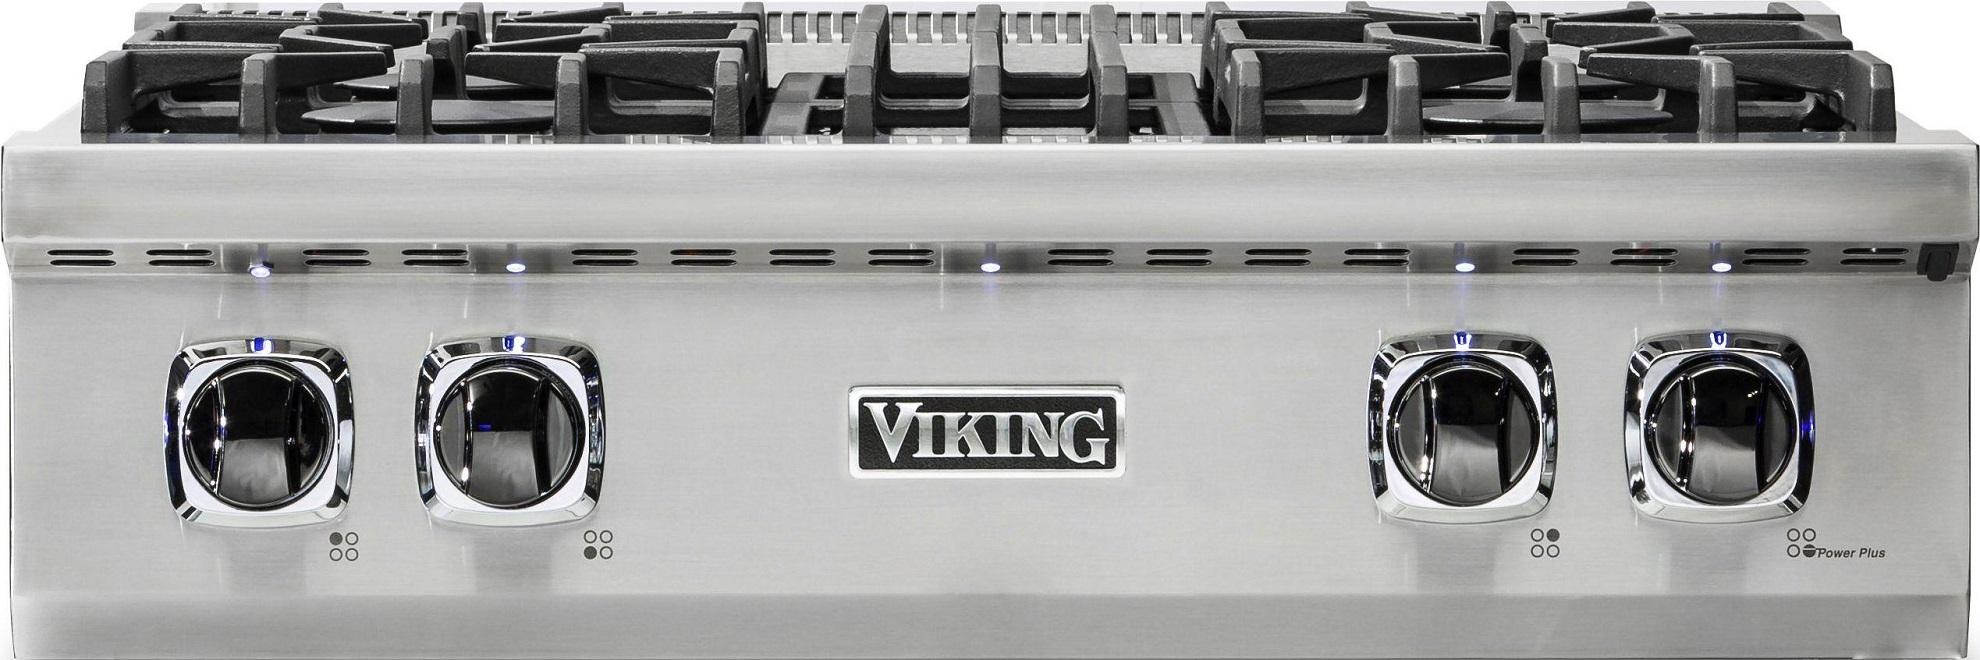 Viking VRT5304BSS